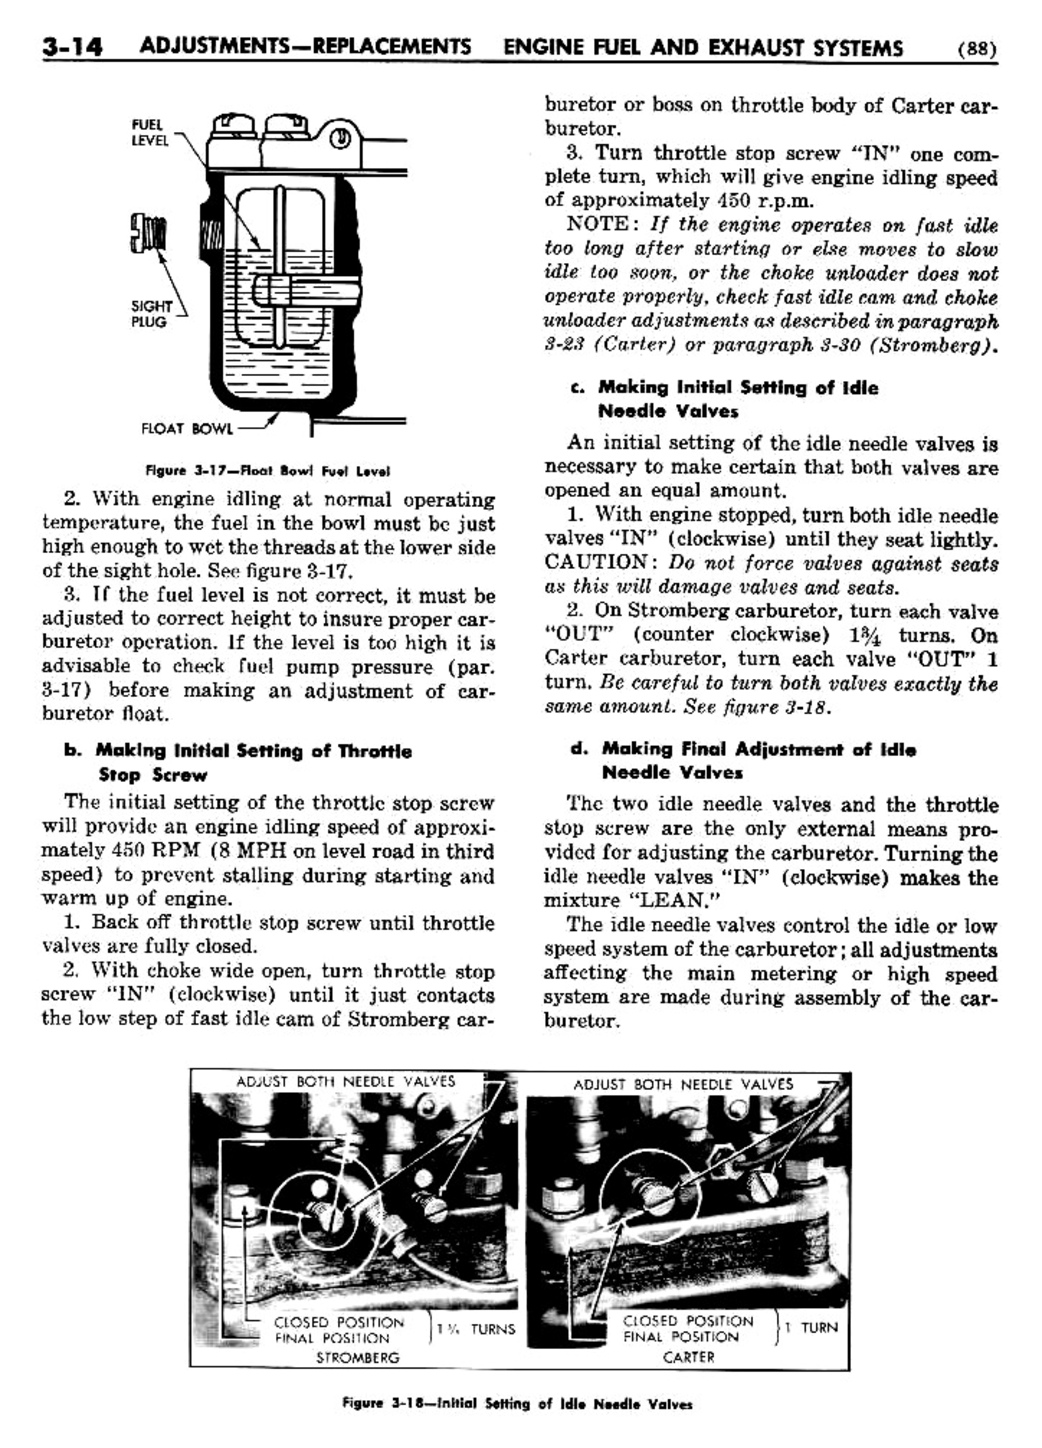 n_04 1948 Buick Shop Manual - Engine Fuel & Exhaust-014-014.jpg